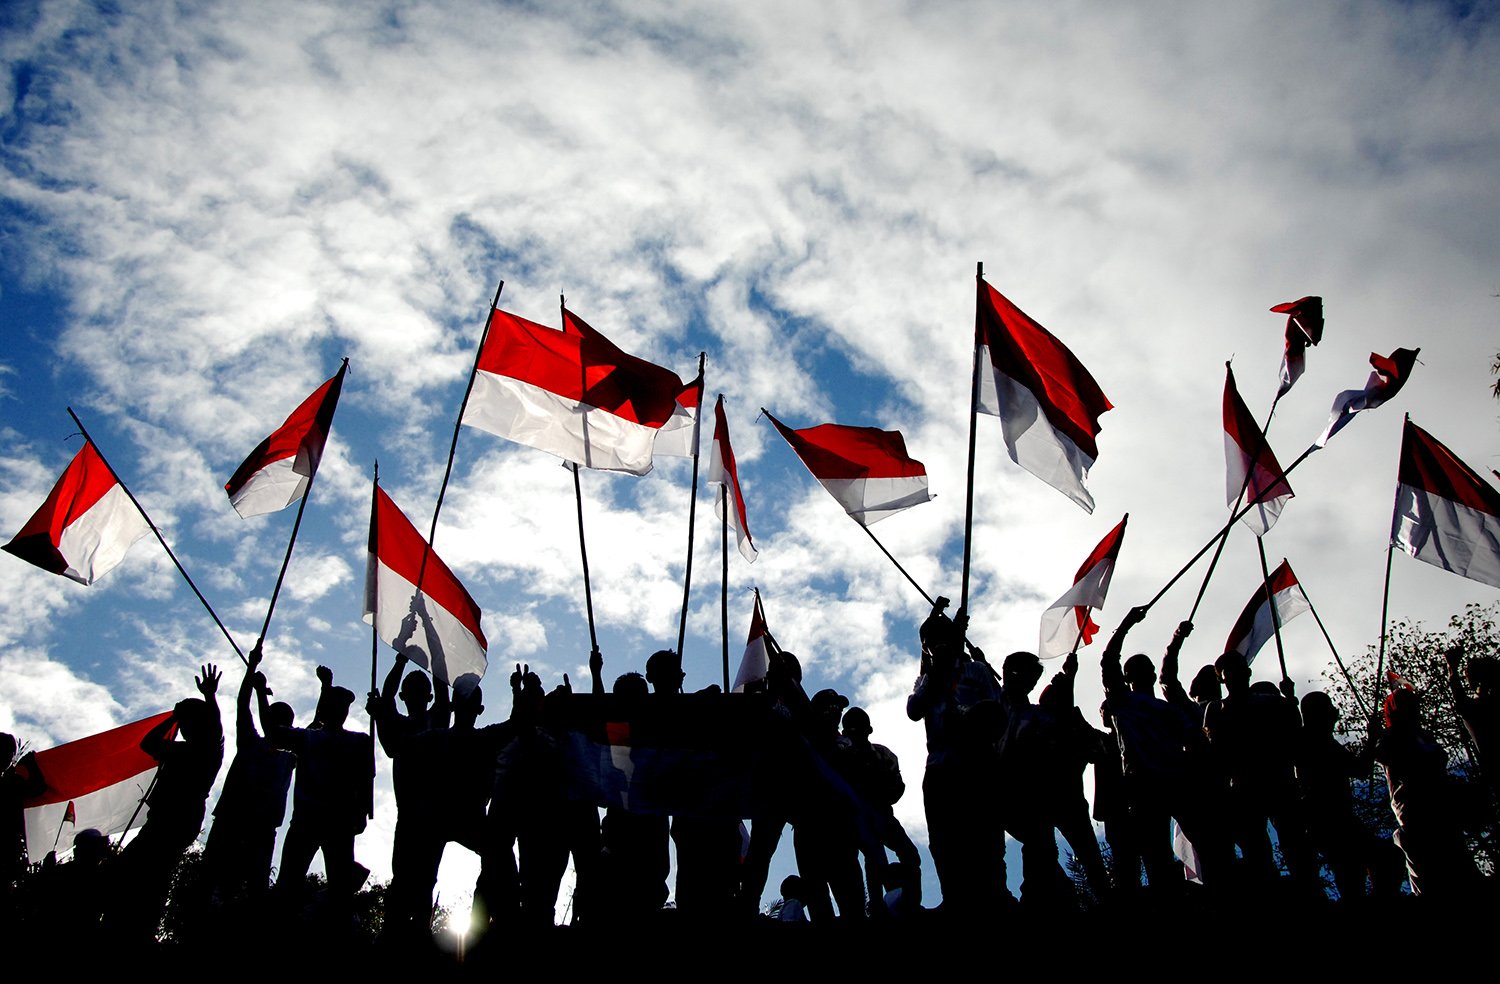 Sejumlah warga membawa bendera merah putih saat mengikuti upacara bendera memperingati HUT ke-74 Kemerdekaan RI di Bukit Tokka, Desa Bontomarannu, Kabupaten Maros, Sulawesi Selatan, Sabtu (17/8/2019). Upacara bendera peringatan hari kemerdekaan RI yang digelar di atas bukit tersebut diikuti ratusan warga dari sejumlah kalangan. 